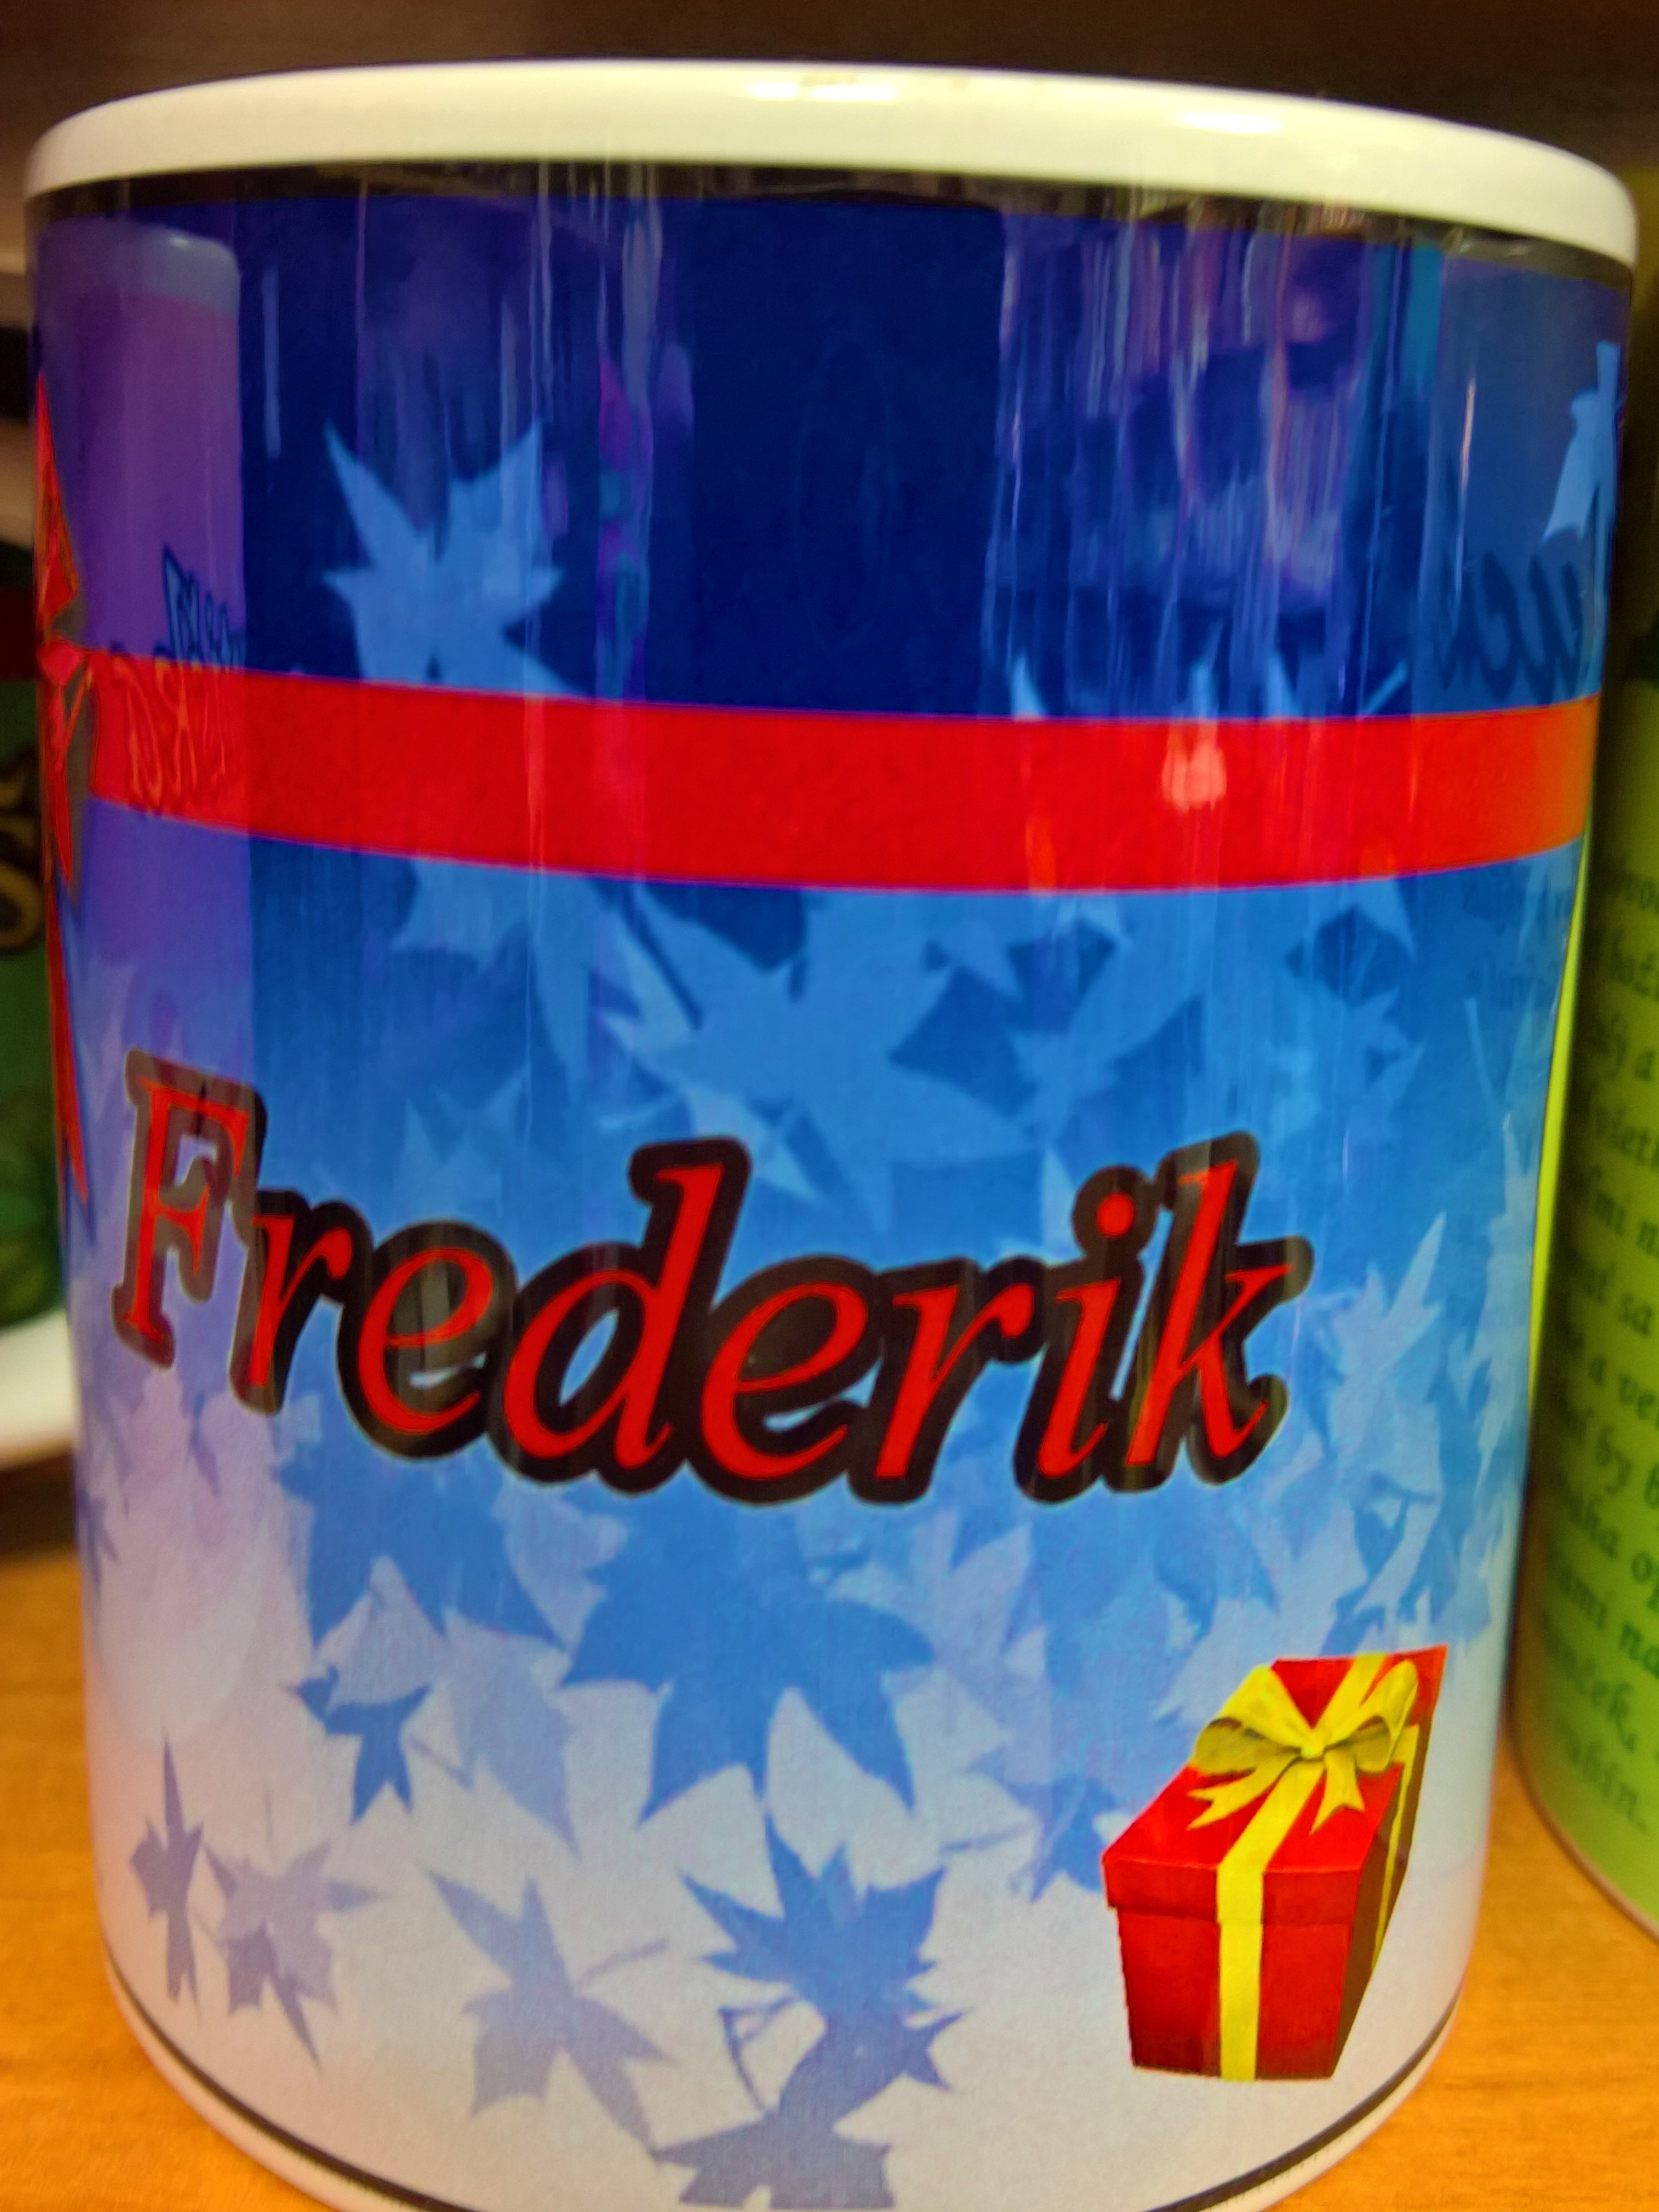 Hrnček "Frederik"